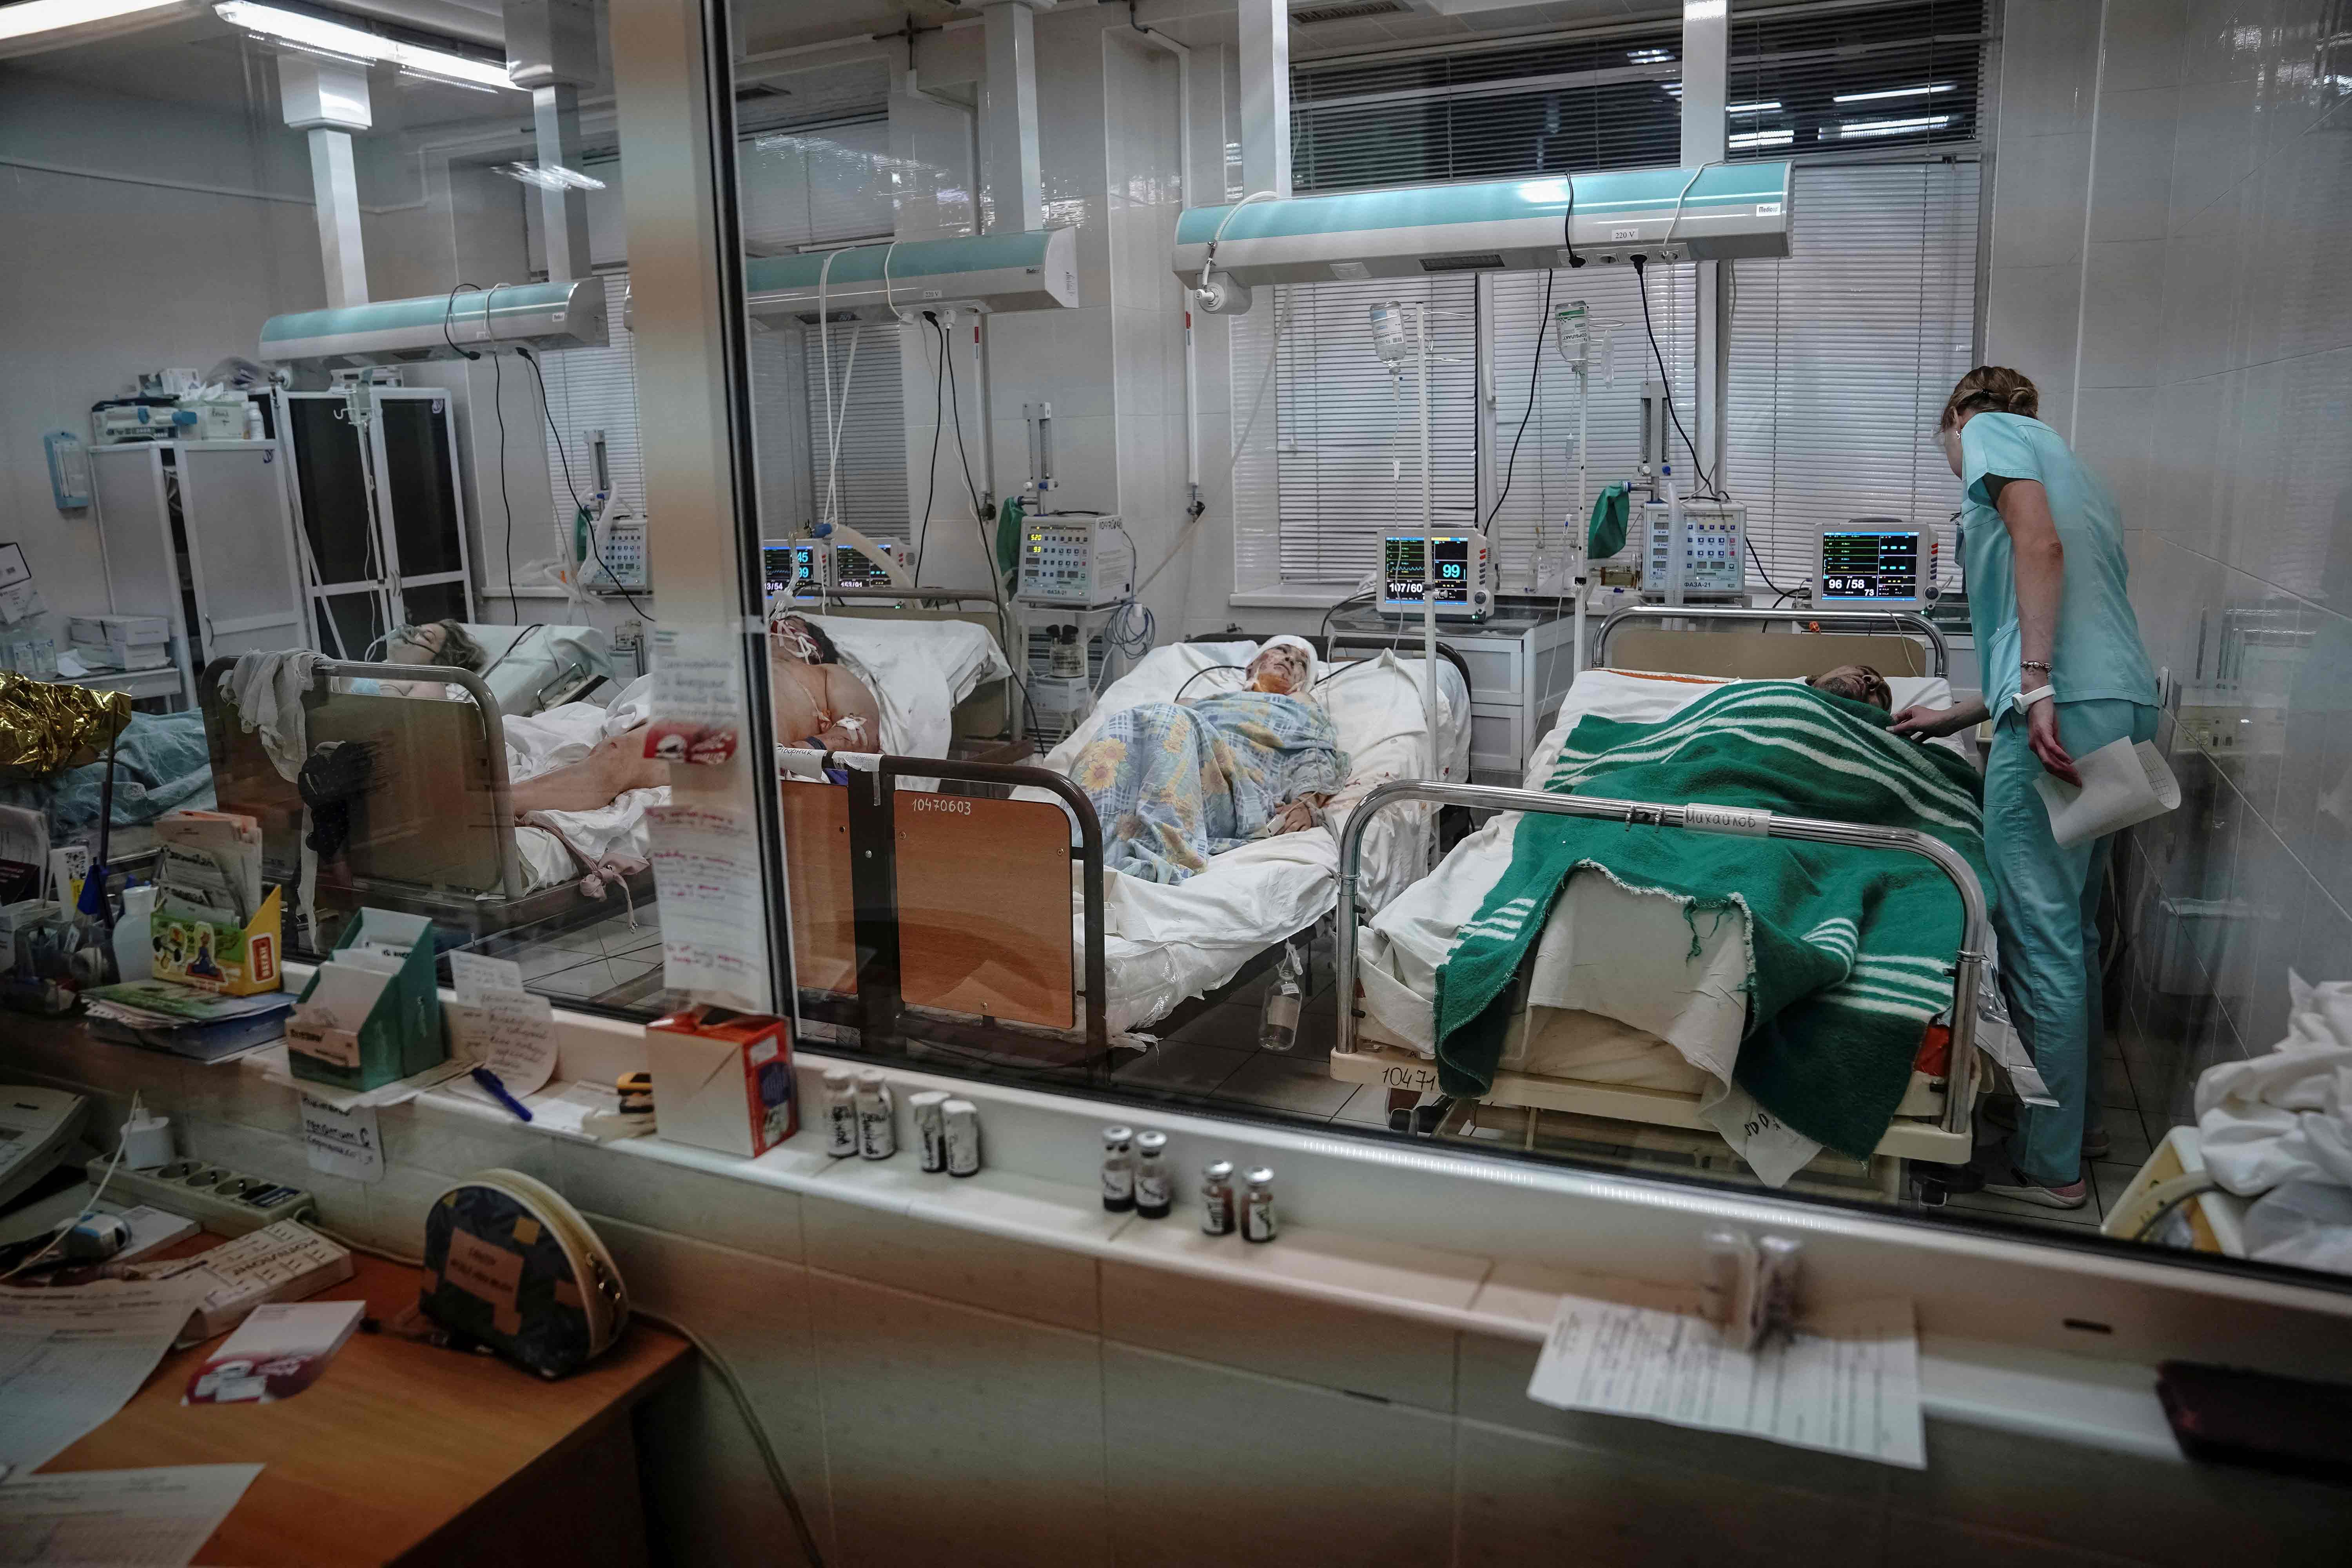 Health crisis in Ukraine worsens as medical facilities still under attack